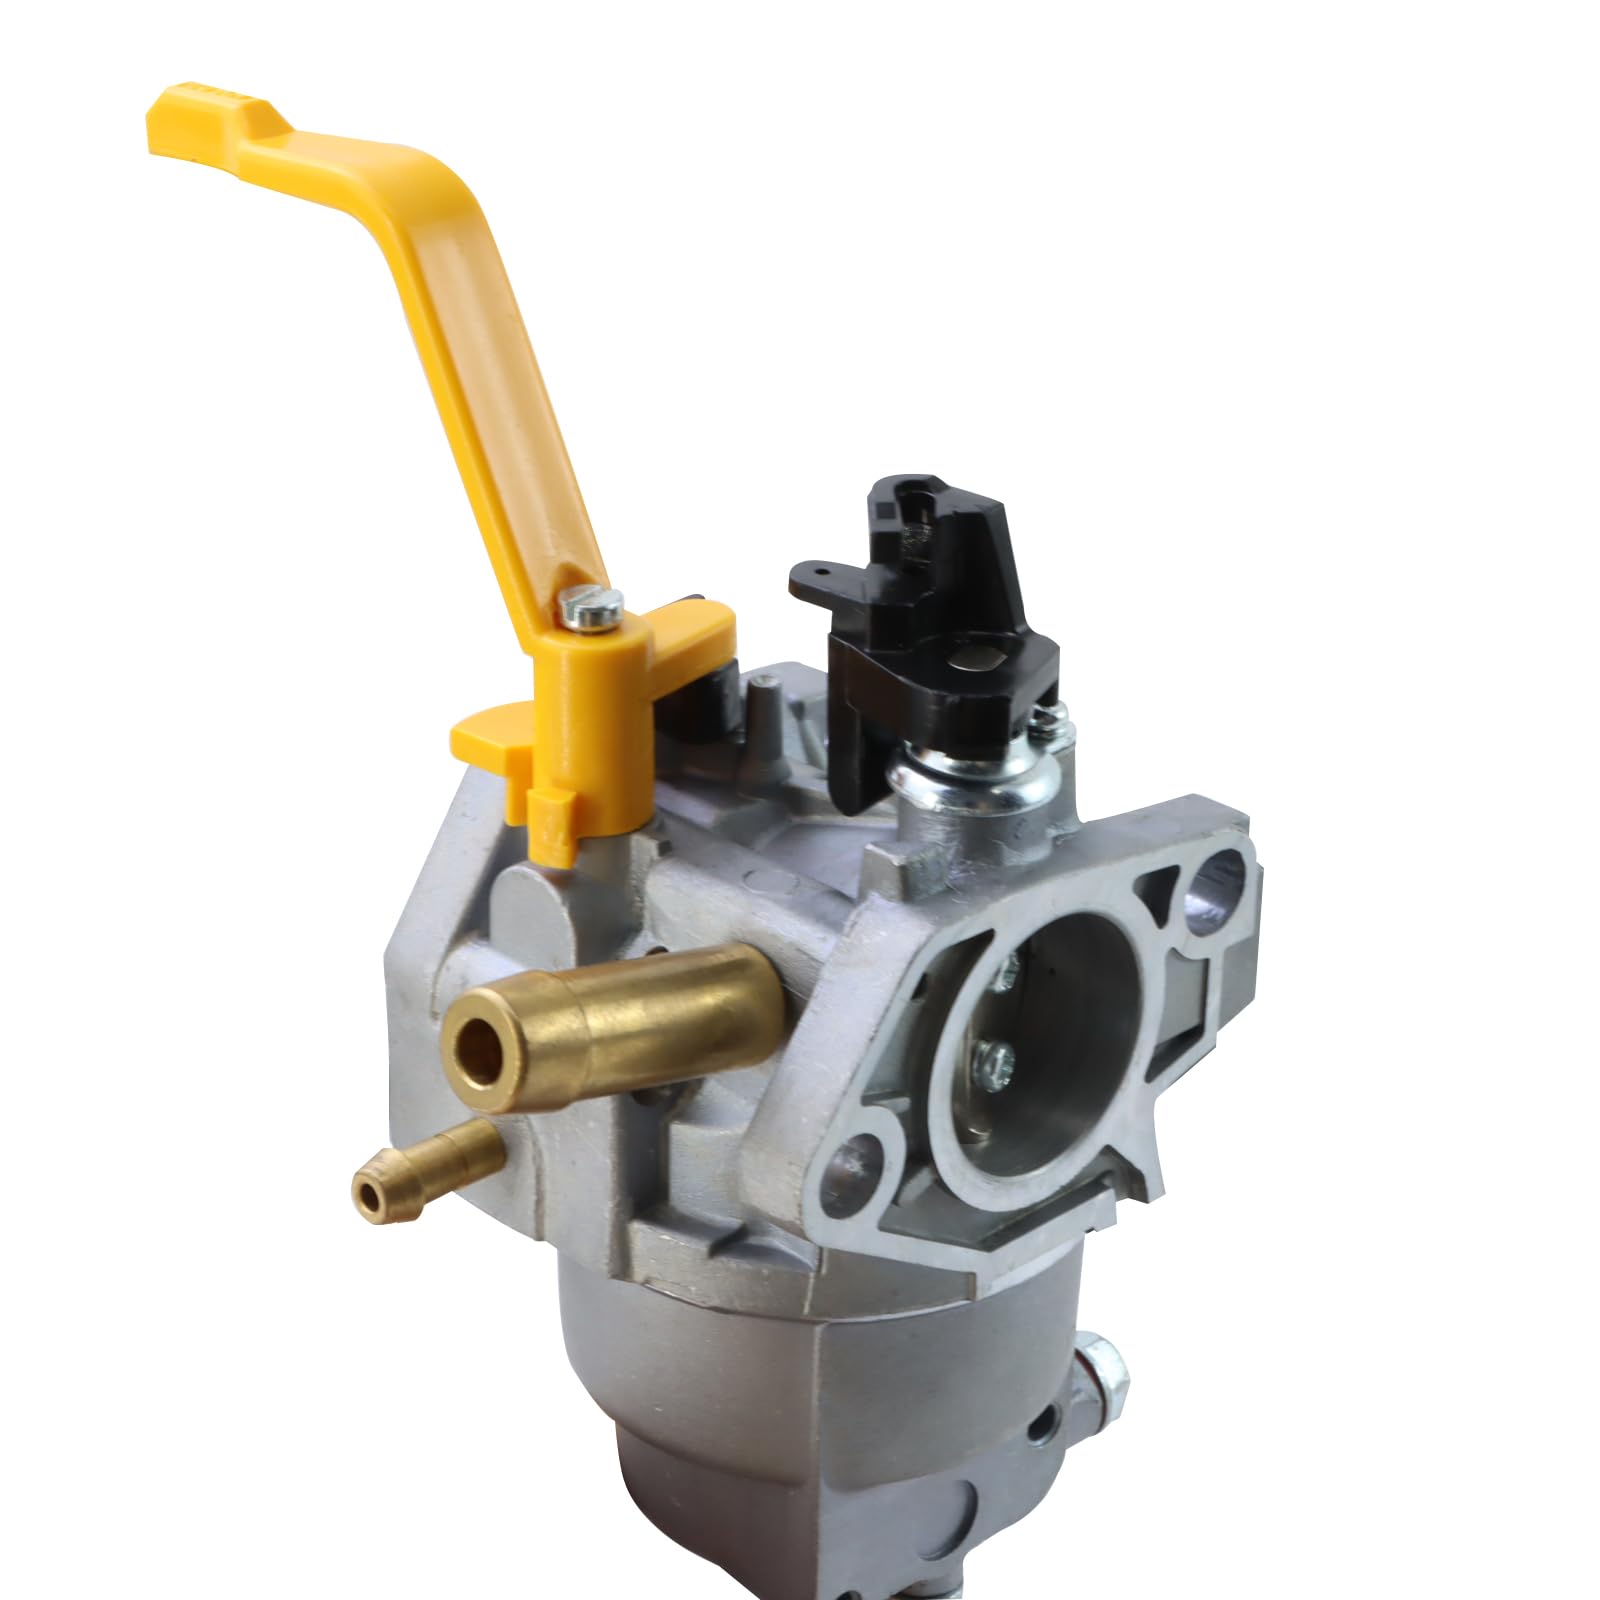 KIKITE Carburetor for Firman T07573 Tri Fuel Generator 9400 Watt 439cc Engine Carburetor Part# 375715509